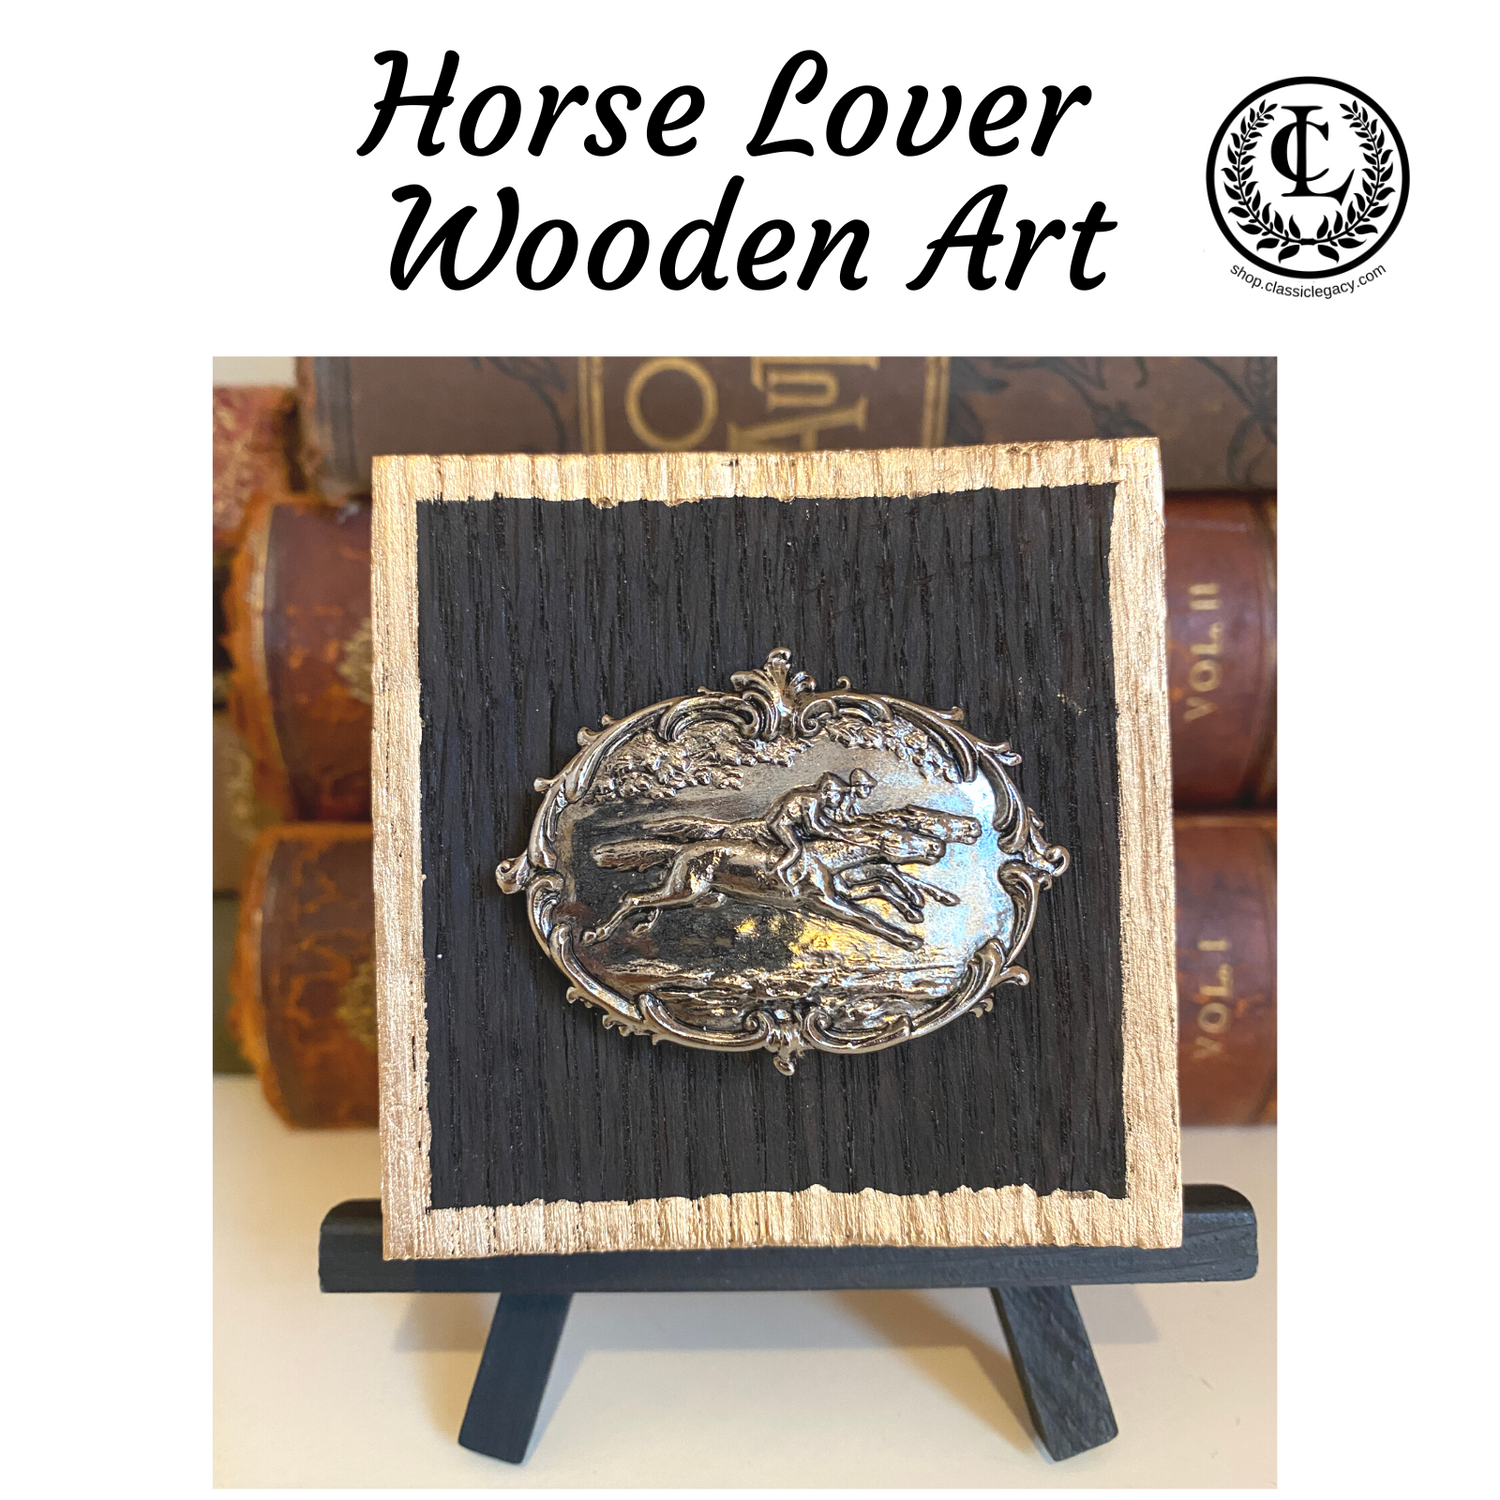 Horse, Bourbon Barrel Wooden Art